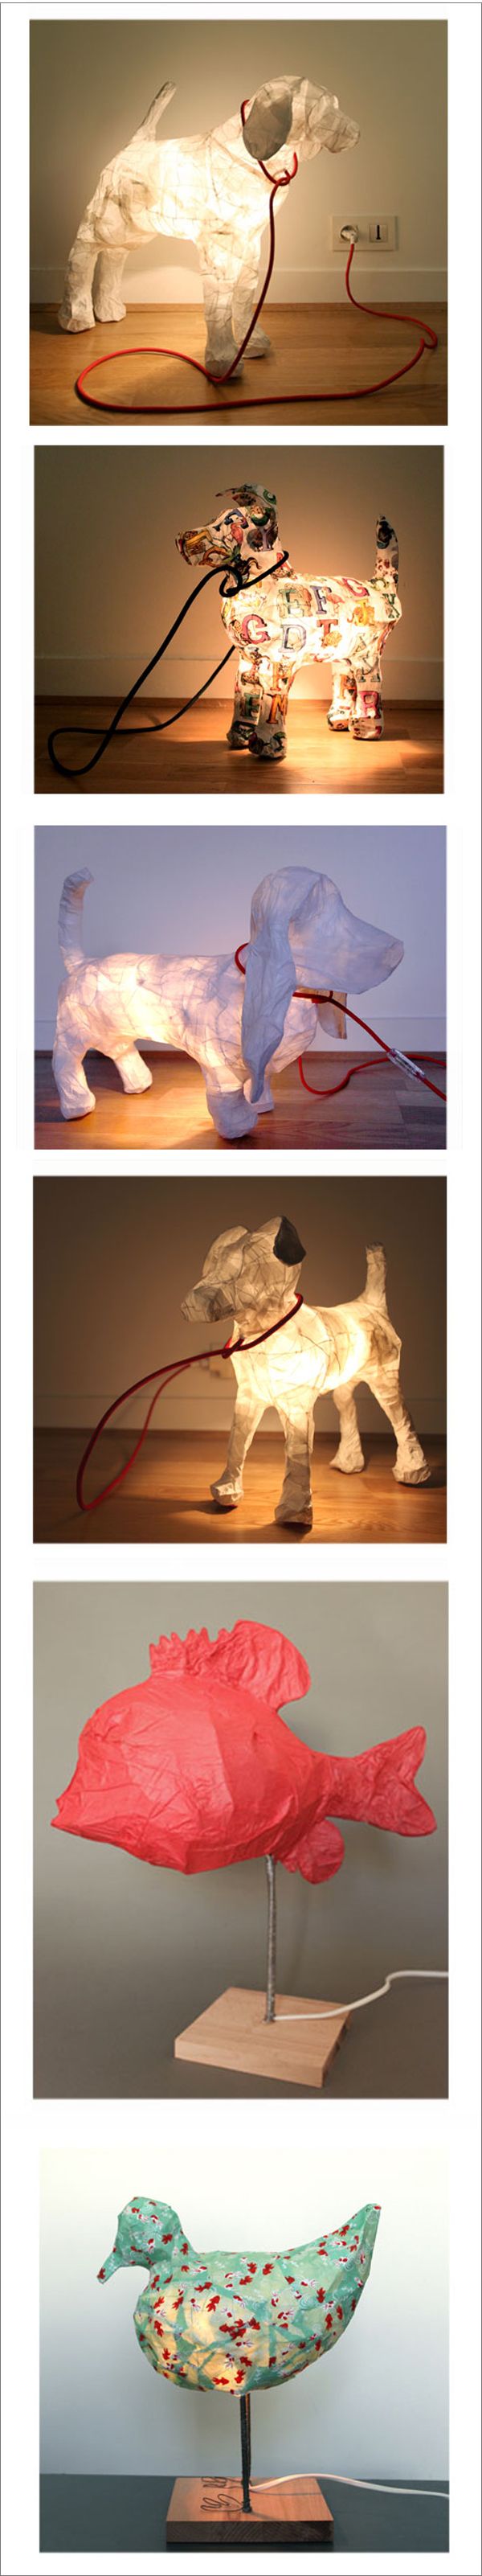 DIY paper Mache Lamp with Animal Sculpture